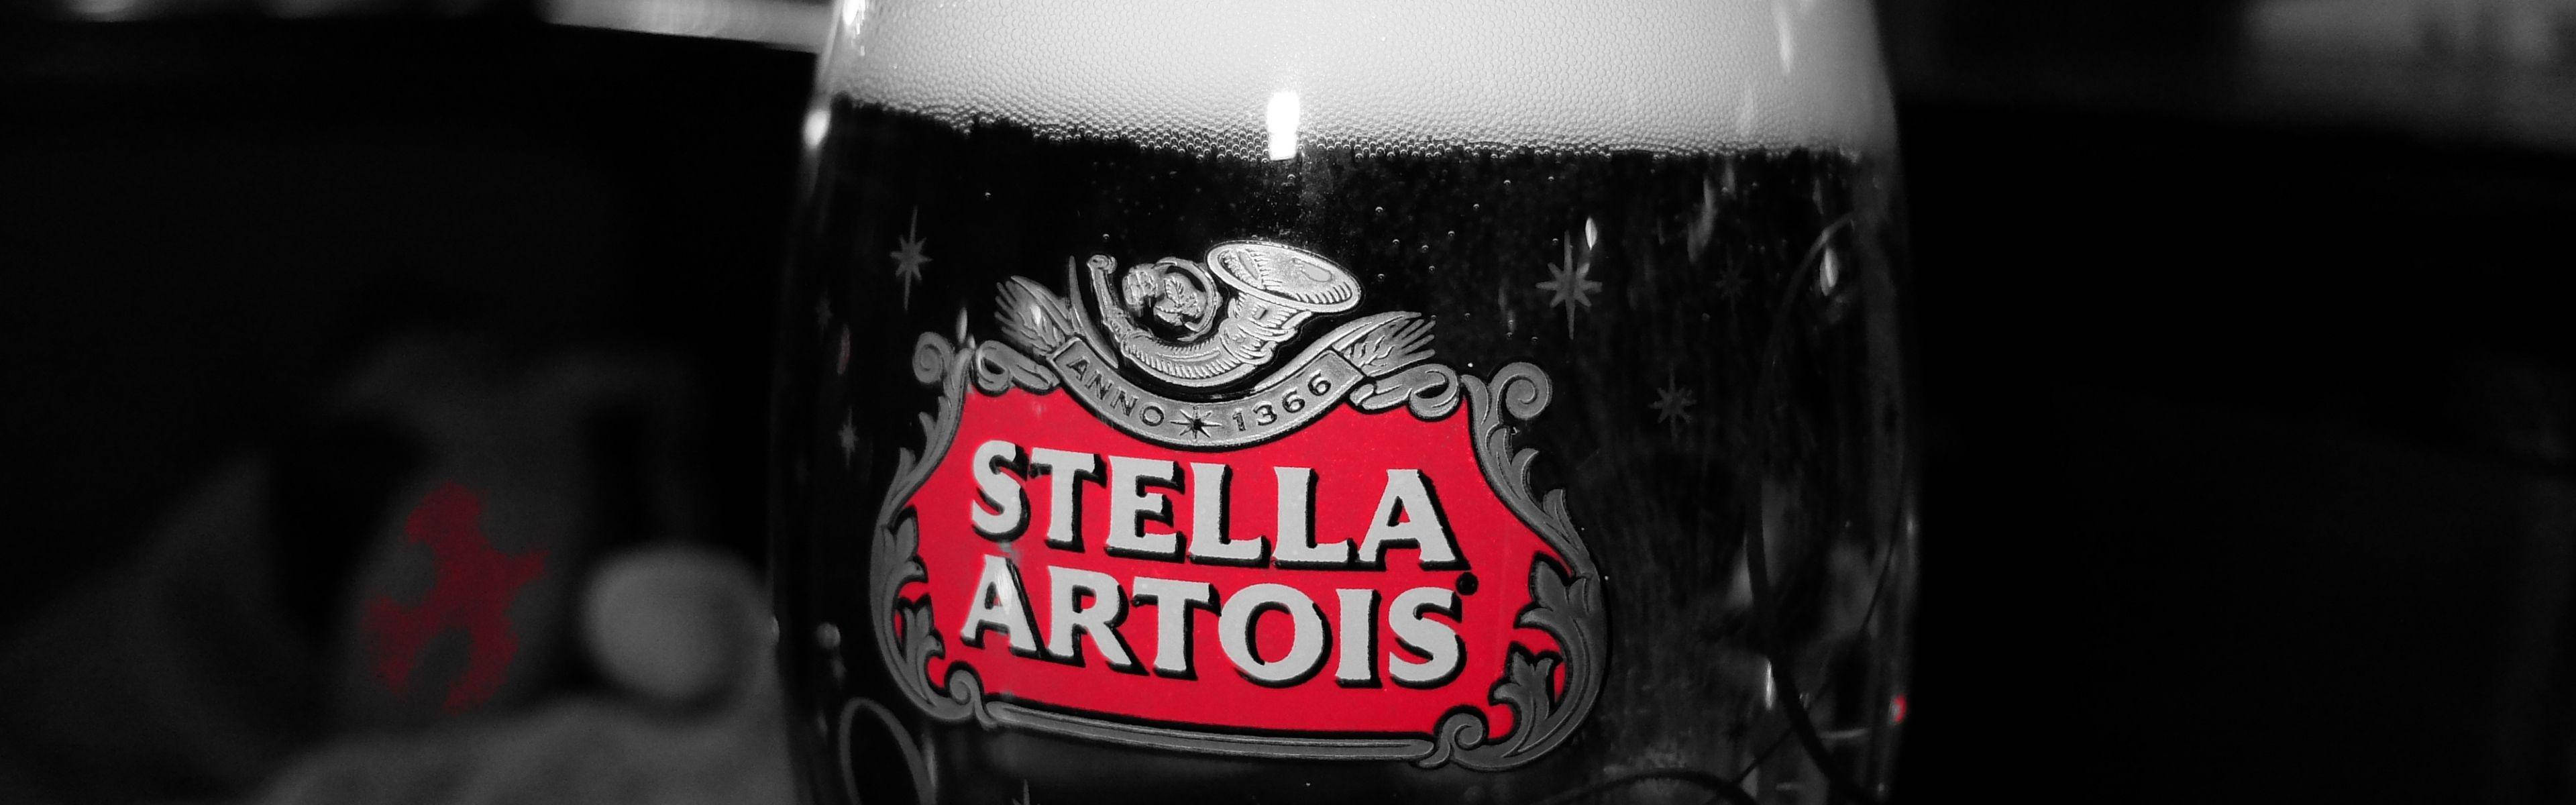 Stellaartois Bier. Wallpaper